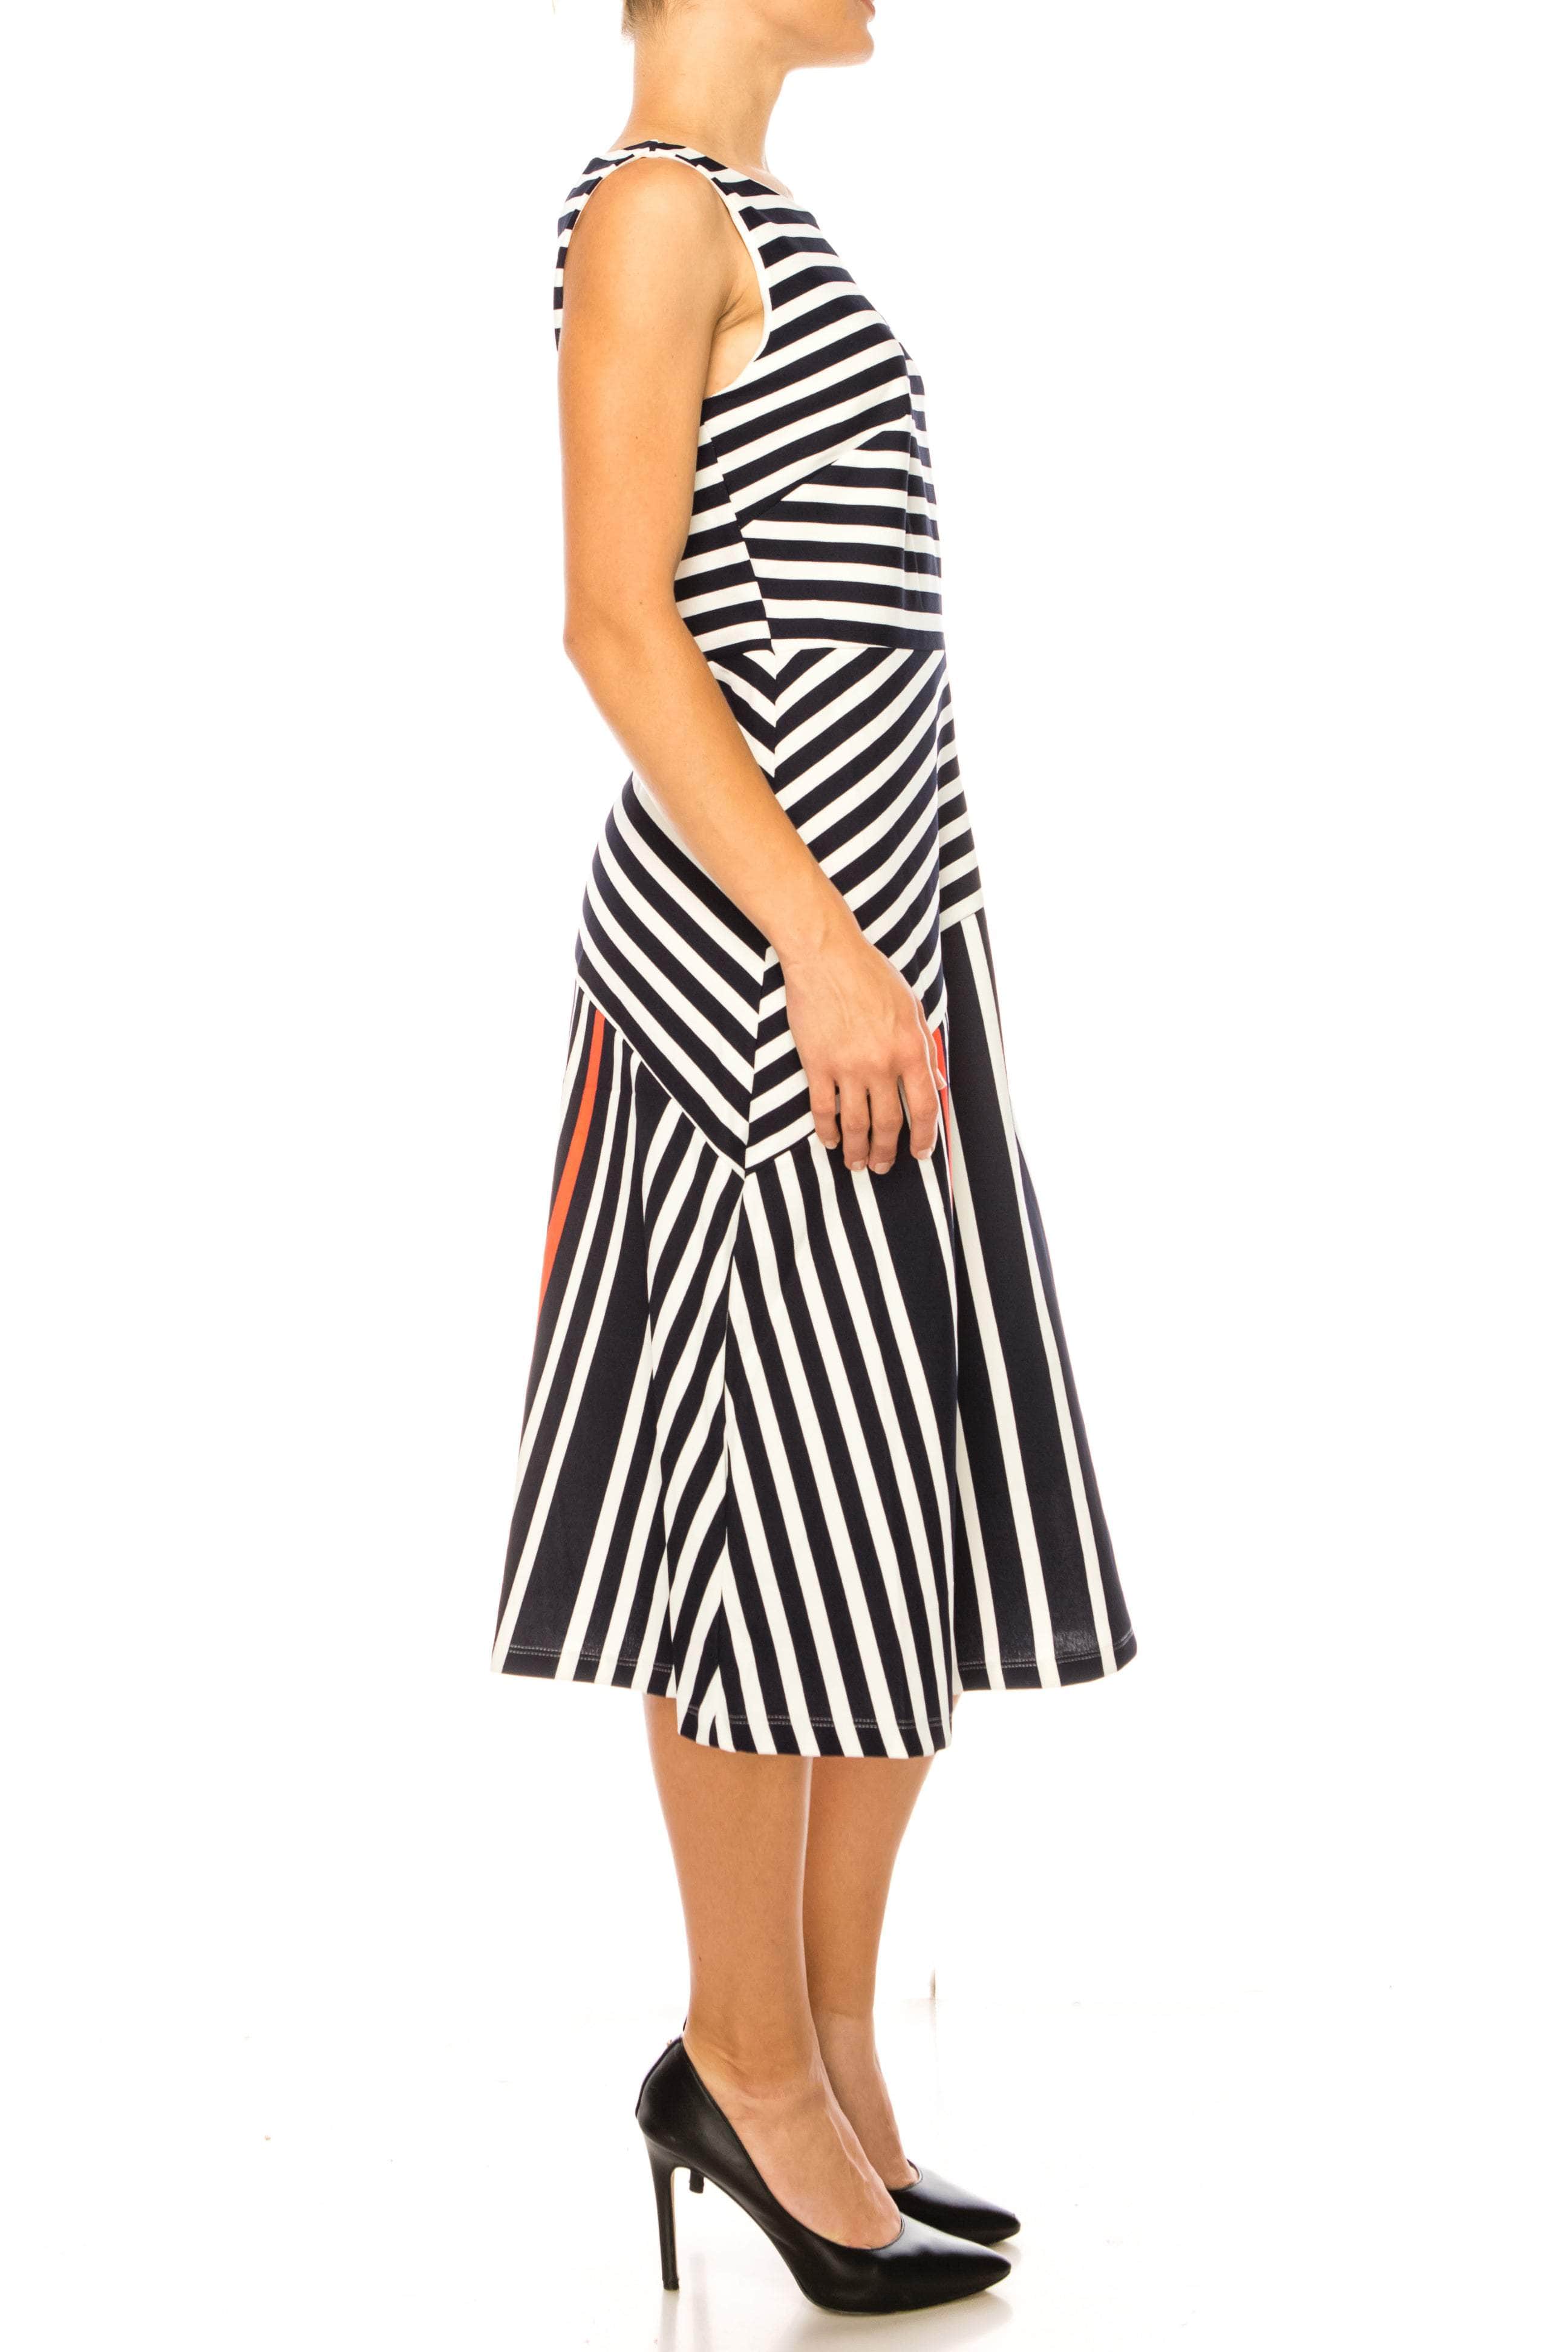 ILE Clothing SCP1326 - Stripe A-Line Dress